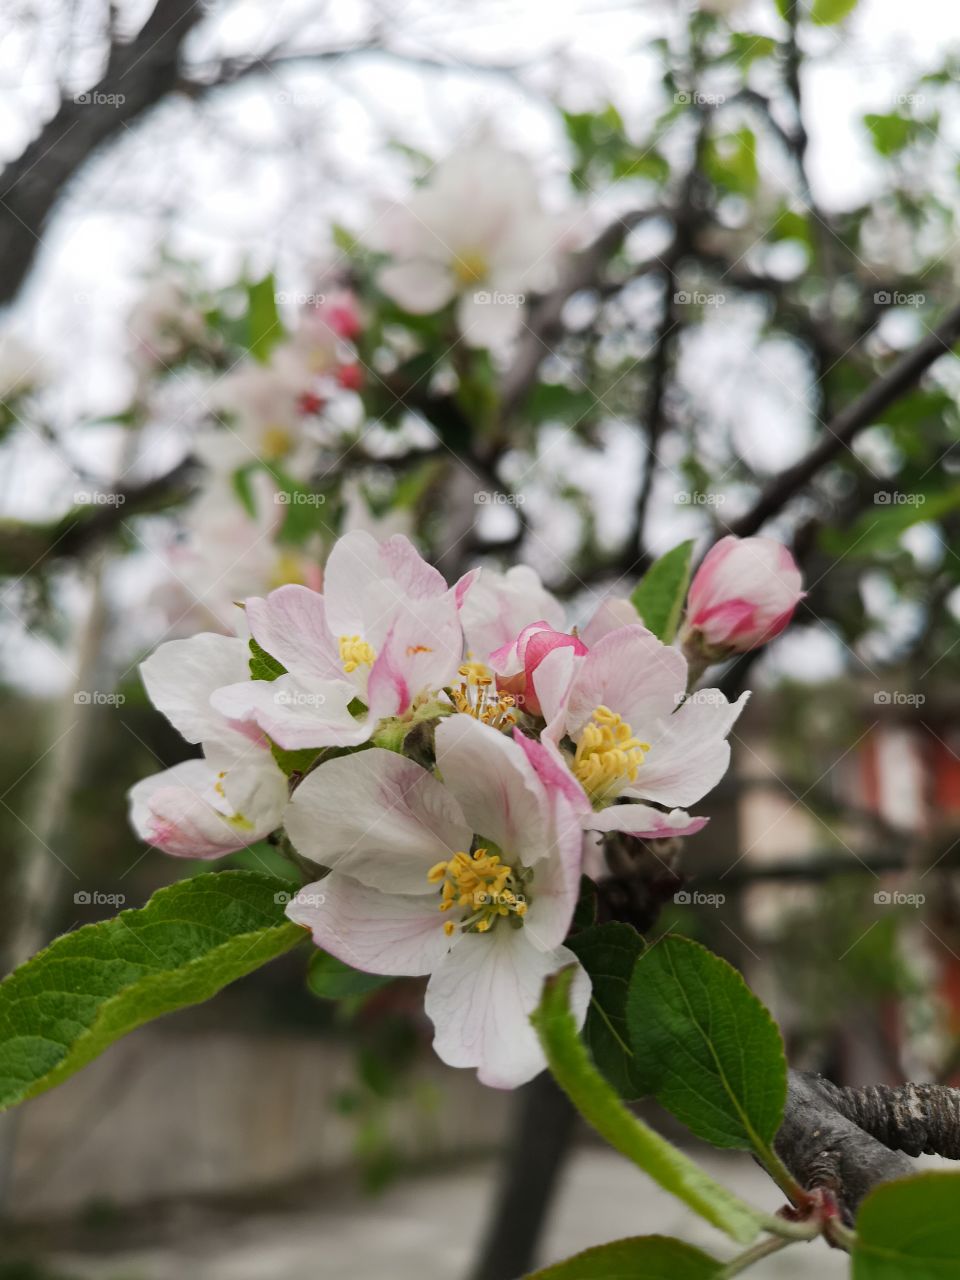 Flower's peach